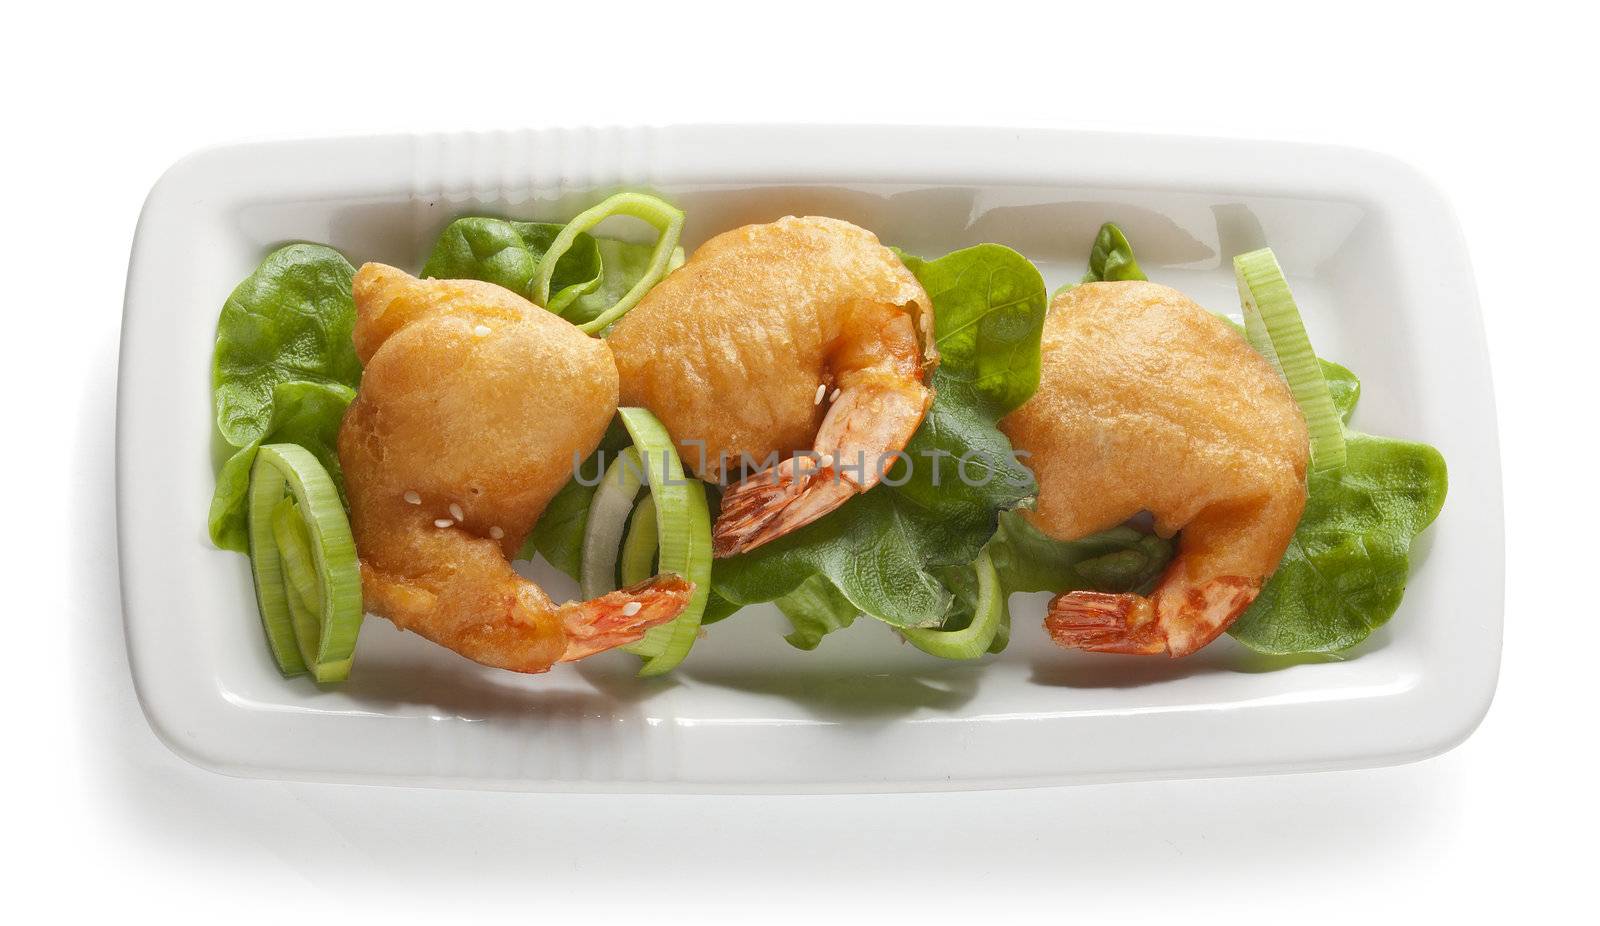 Shrimp tempura by Angorius